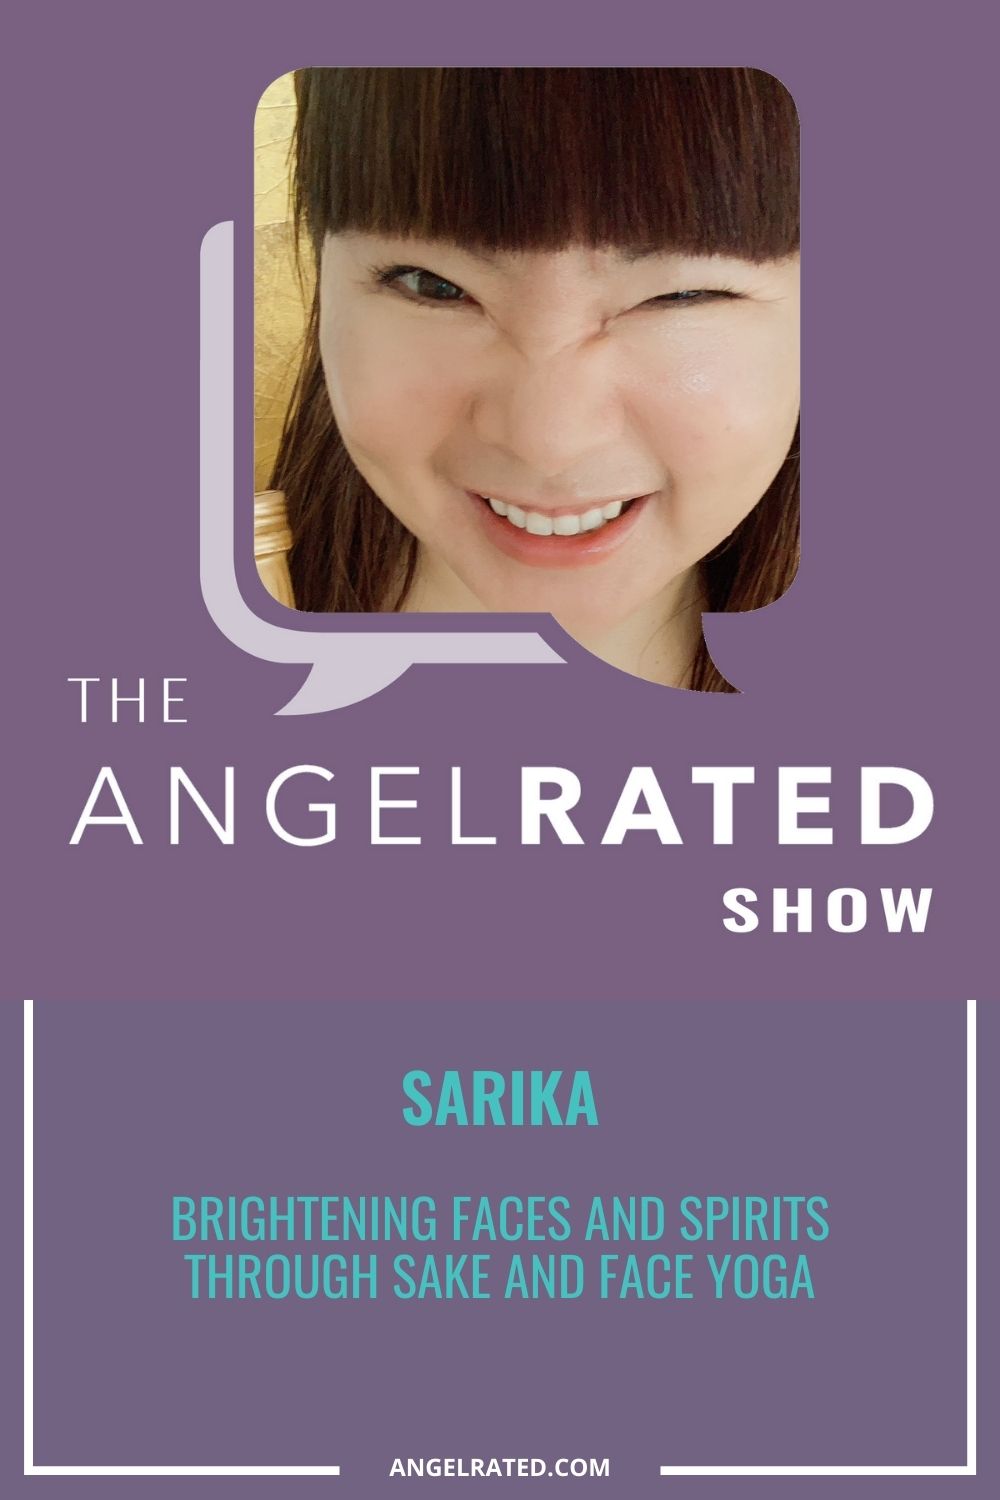 Sarika: Brightening faces and spirits through sake and face yoga